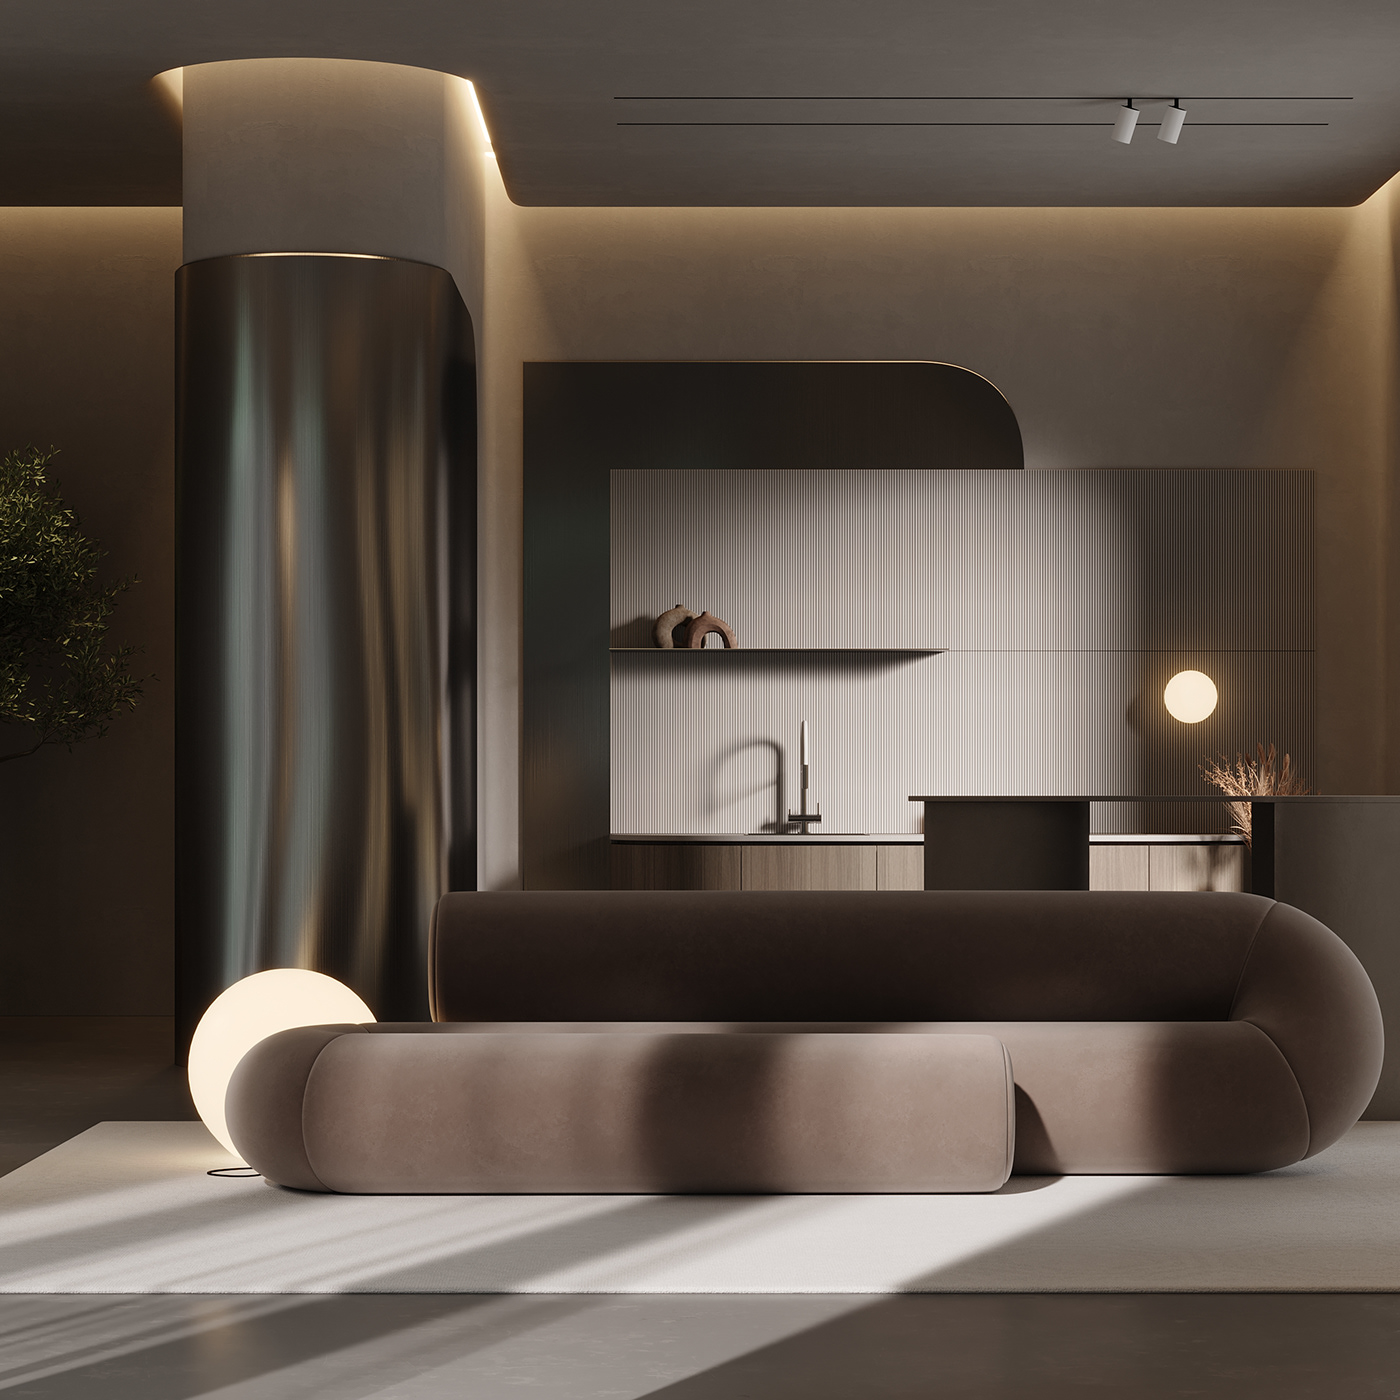 3ds max corona design Interior interior design  kiev minsk Moscow Render Vizualization